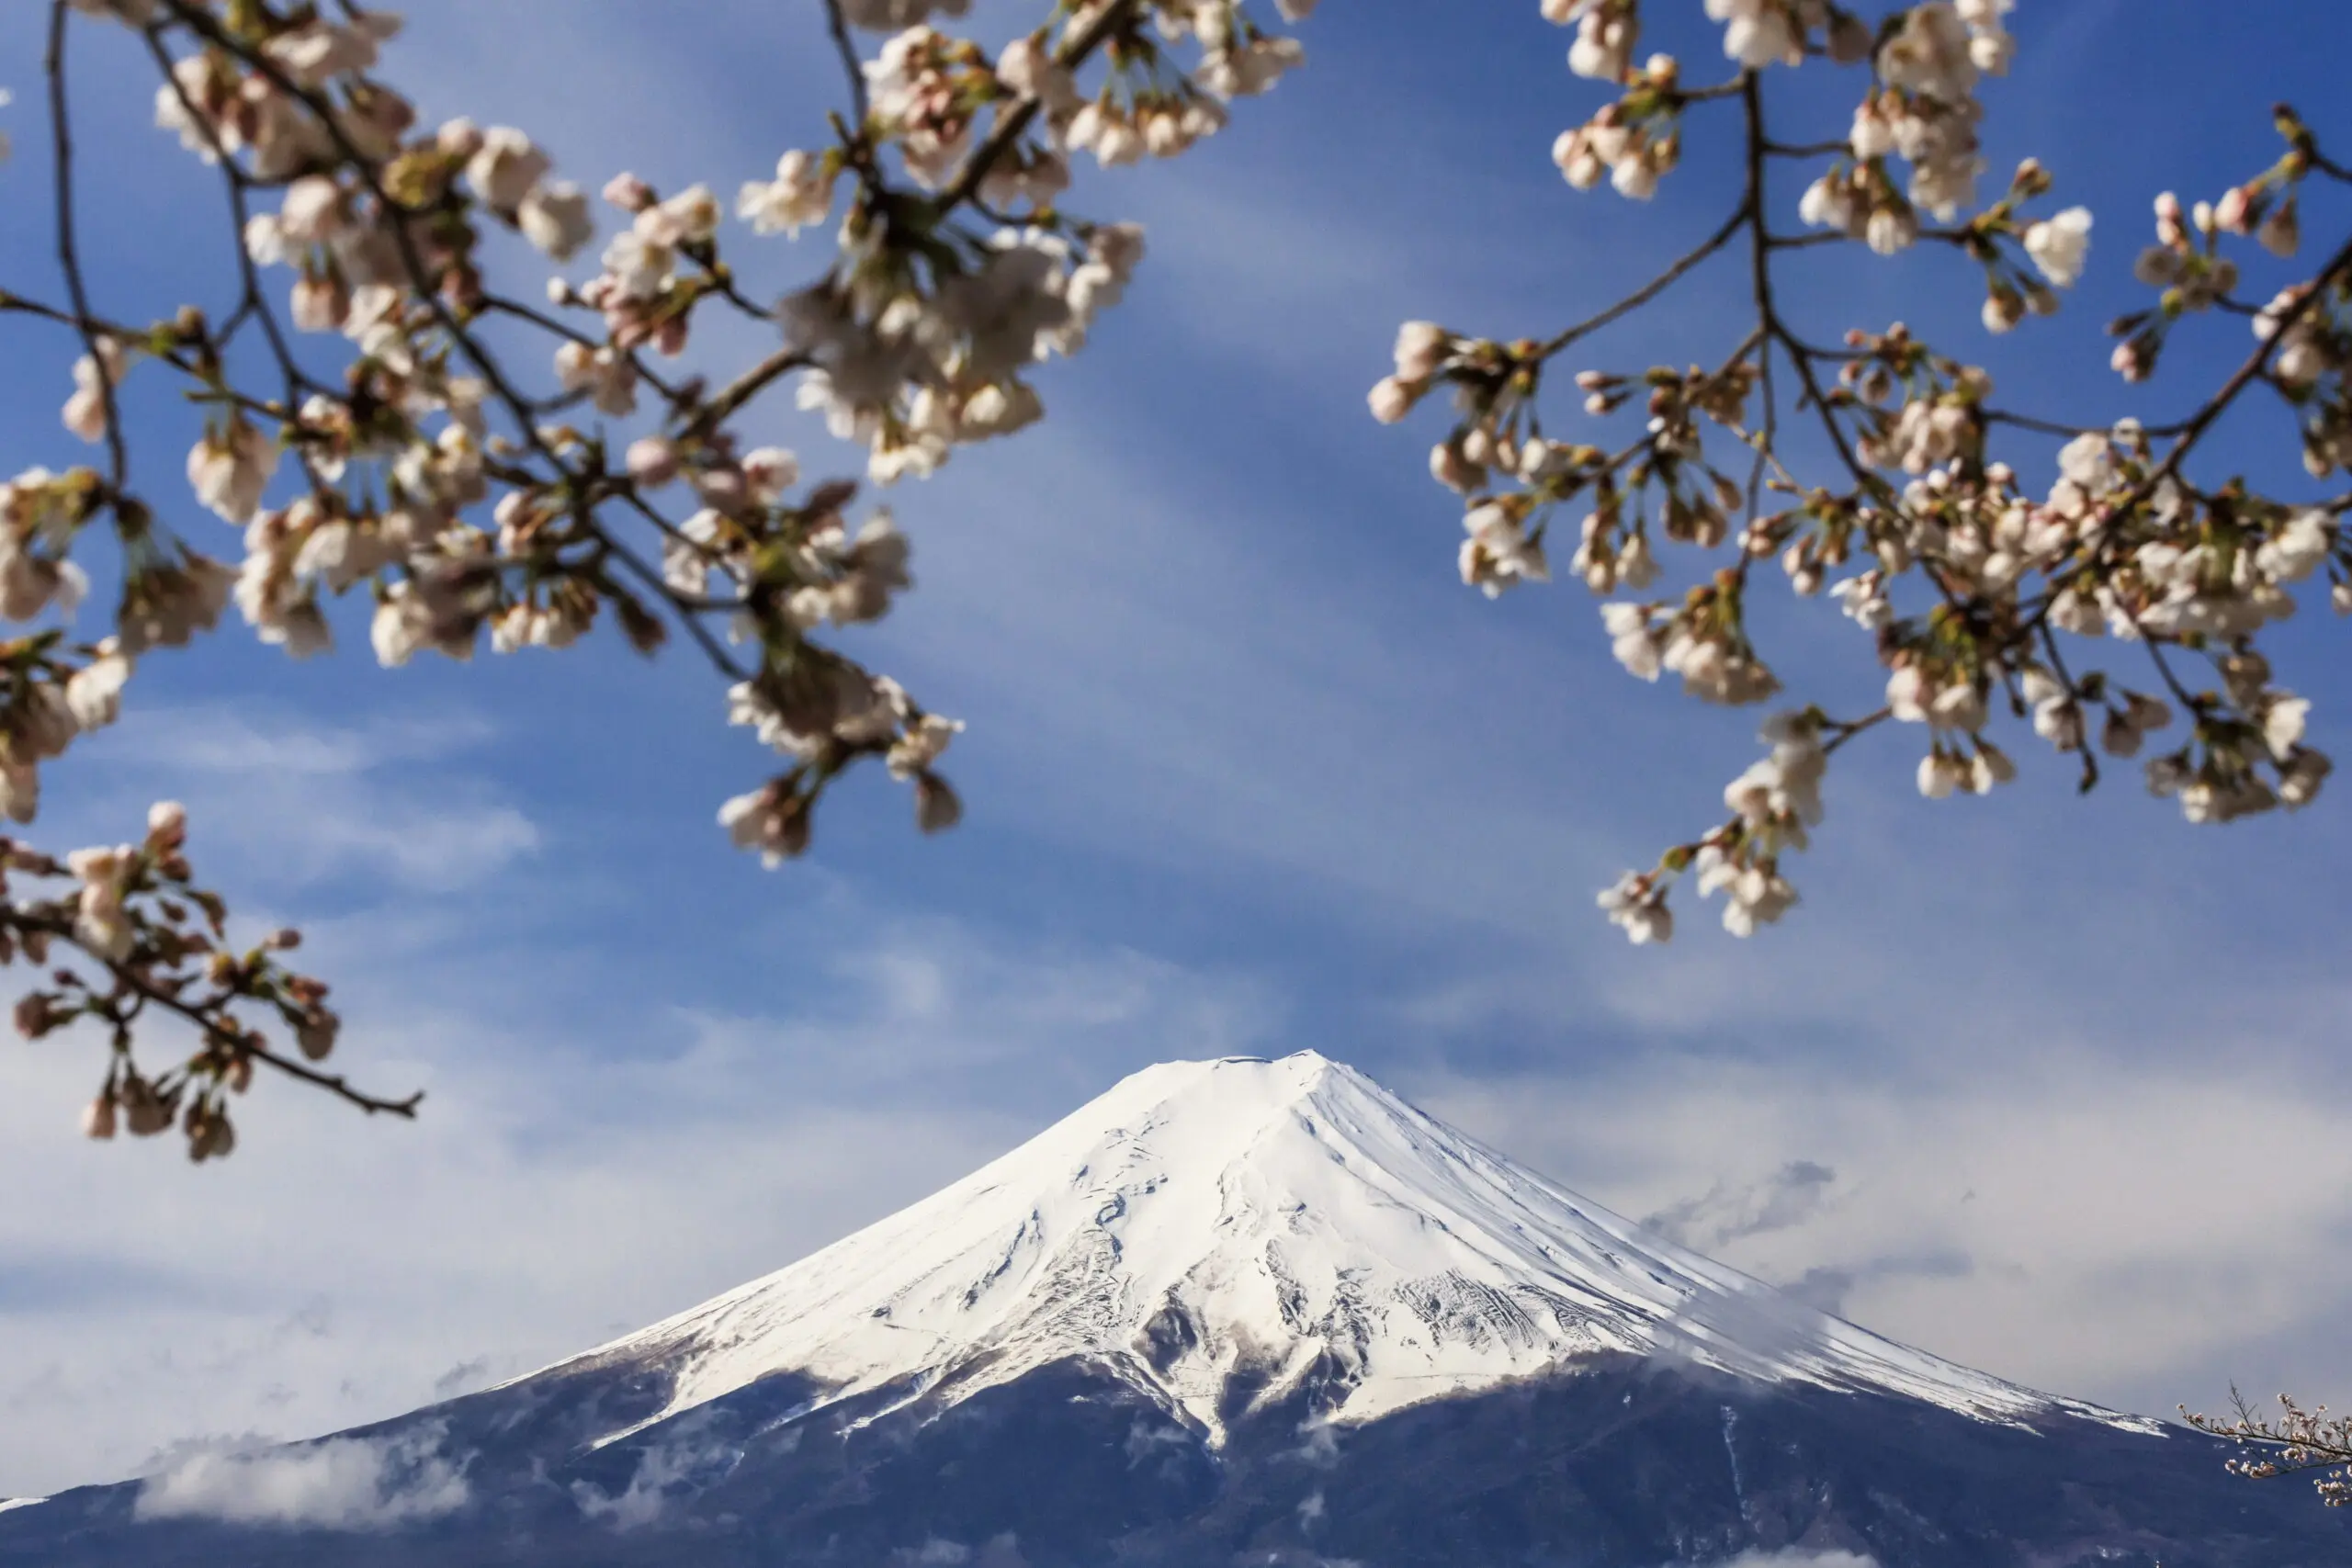 Wandbild (4594) Rellini Maurizio – Mount Fuji präsentiert: Natur,Landschaften,Bäume,Schnee und Eis,Asien,Berge,Frühling